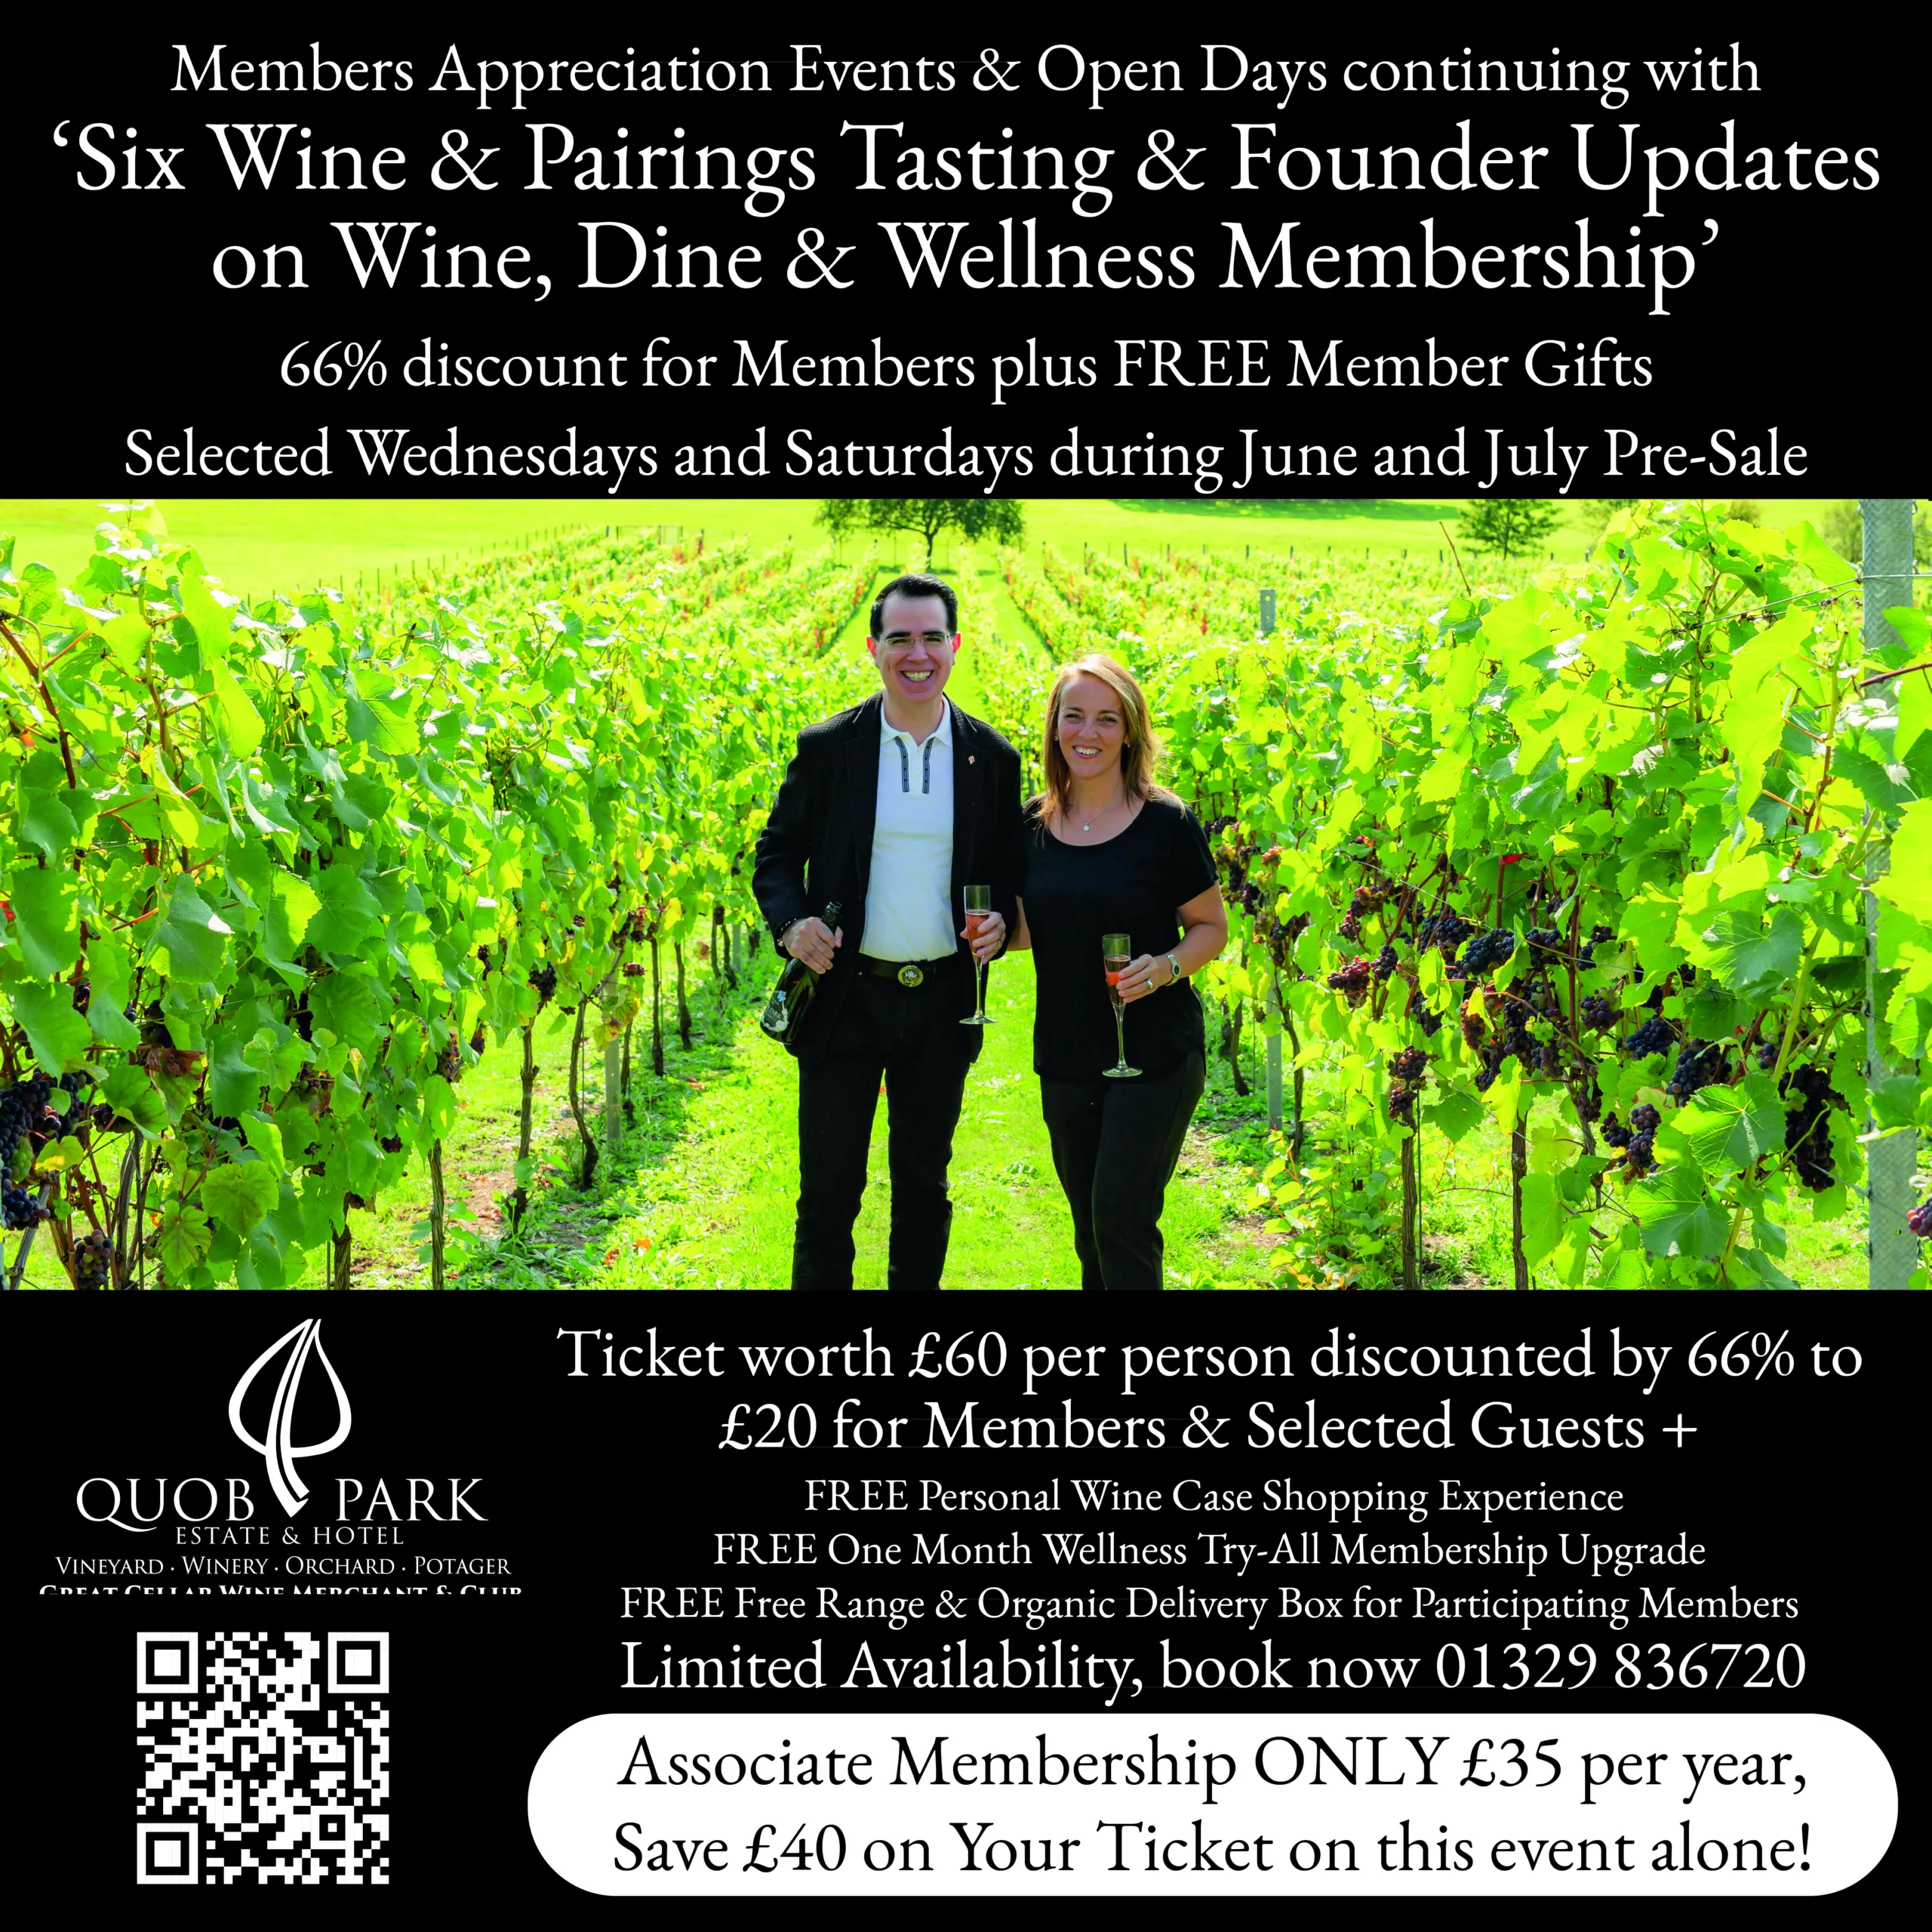 Quob Park Six Wine & Pairings Tasting & Founder Updates on Wine, Dine & Wellness Membership